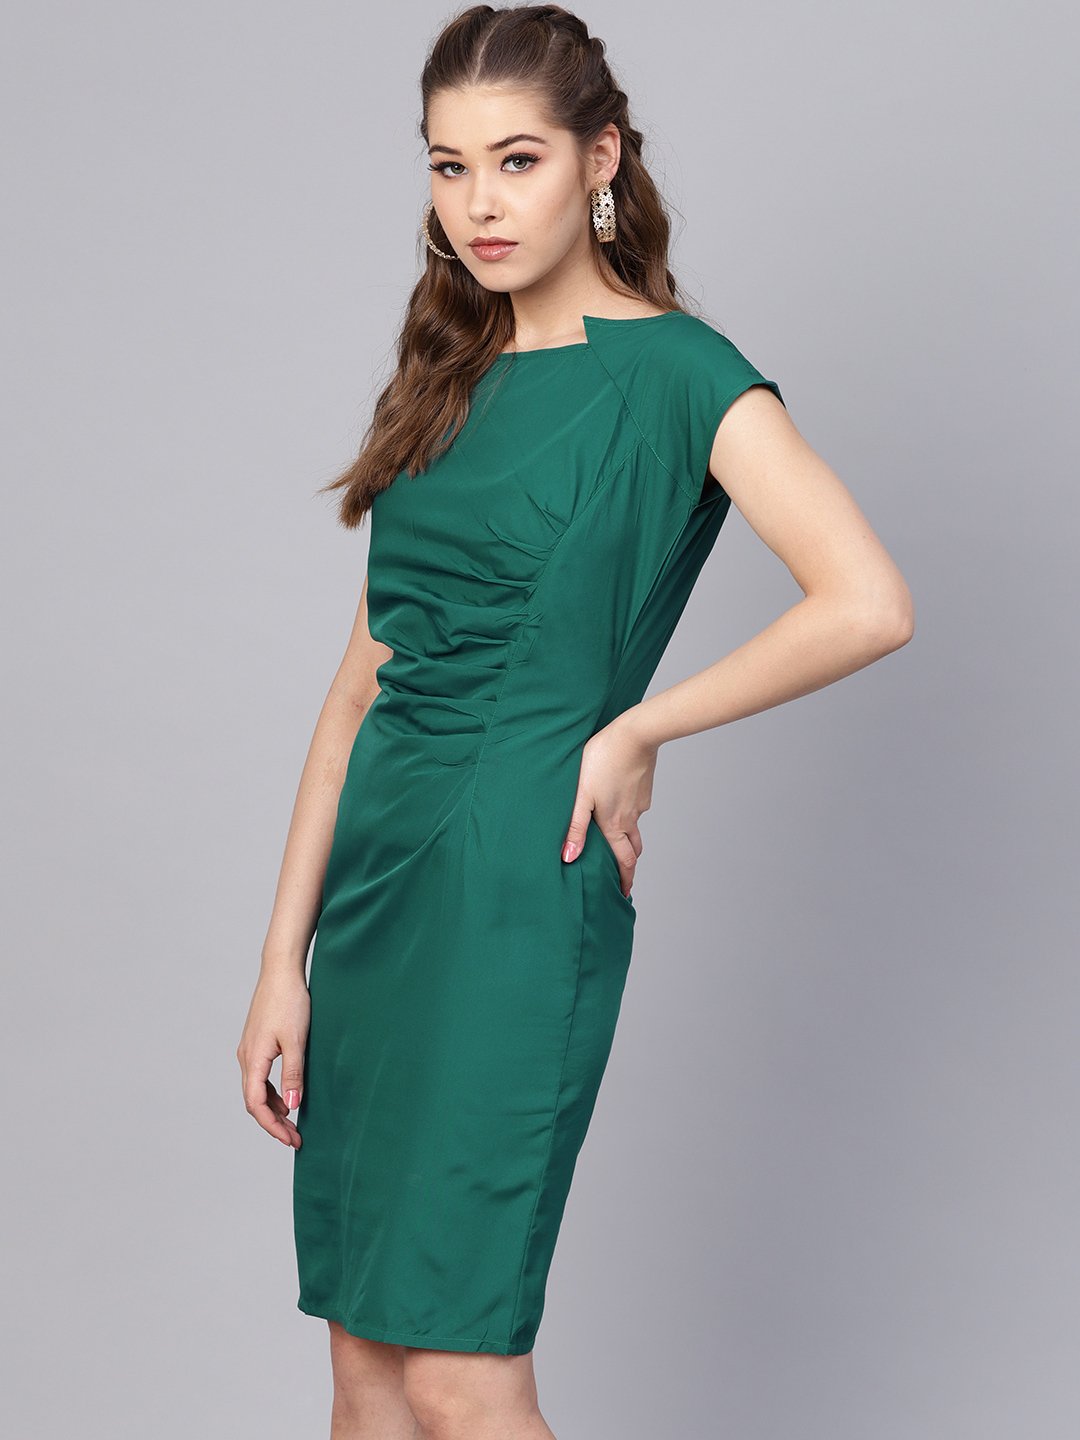 Women's Dark Green Sheath Cap Sleeve Dress - Nayo Clothing